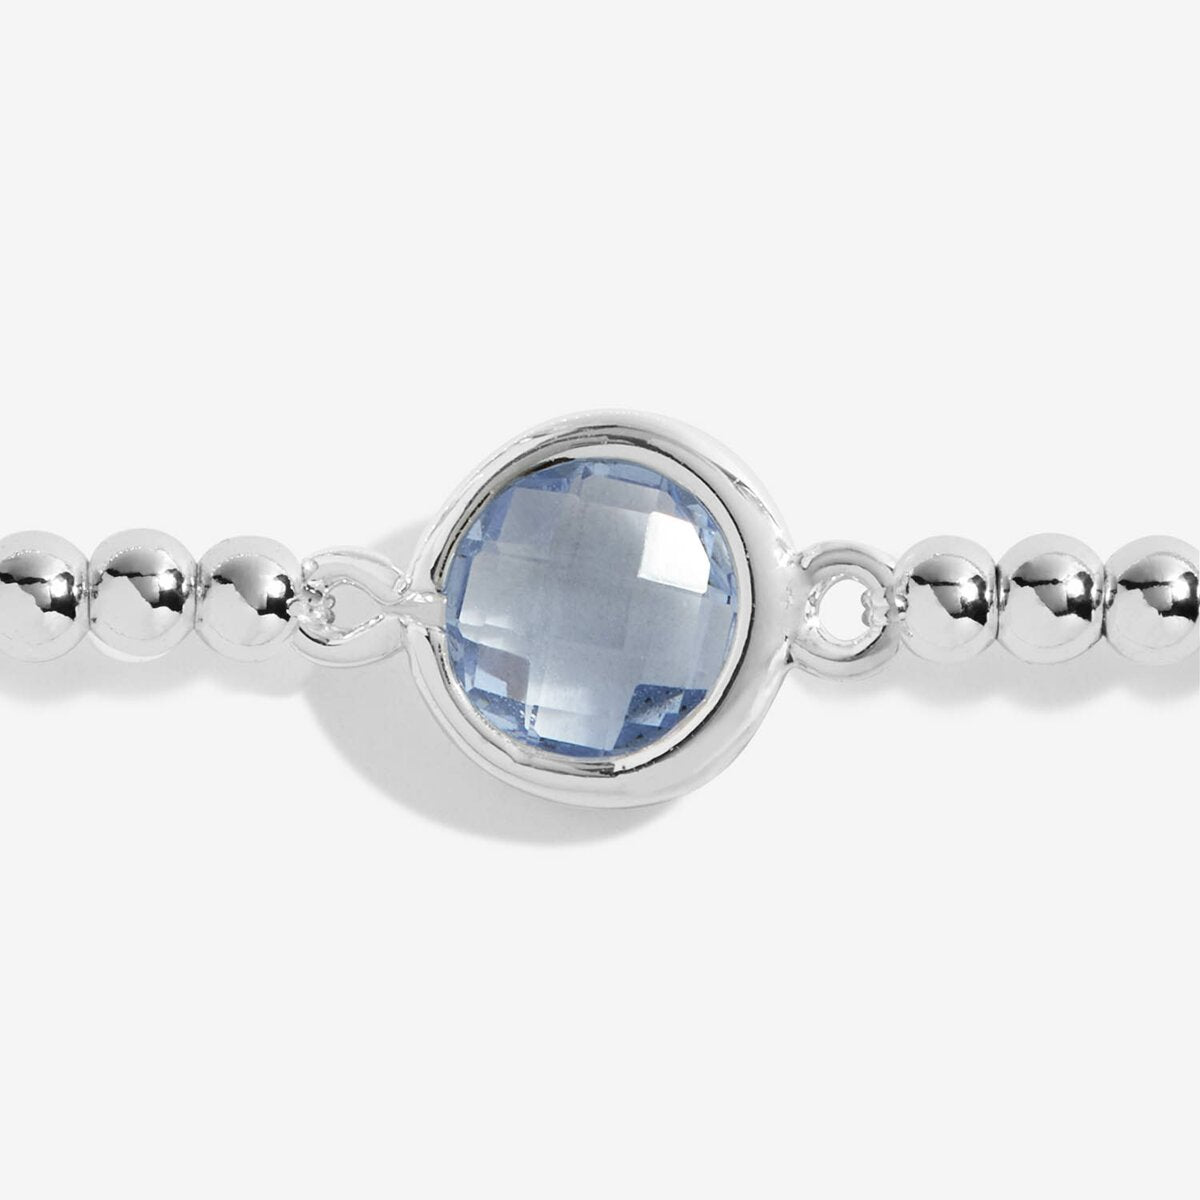 'A Little Something Blue' Bracelet